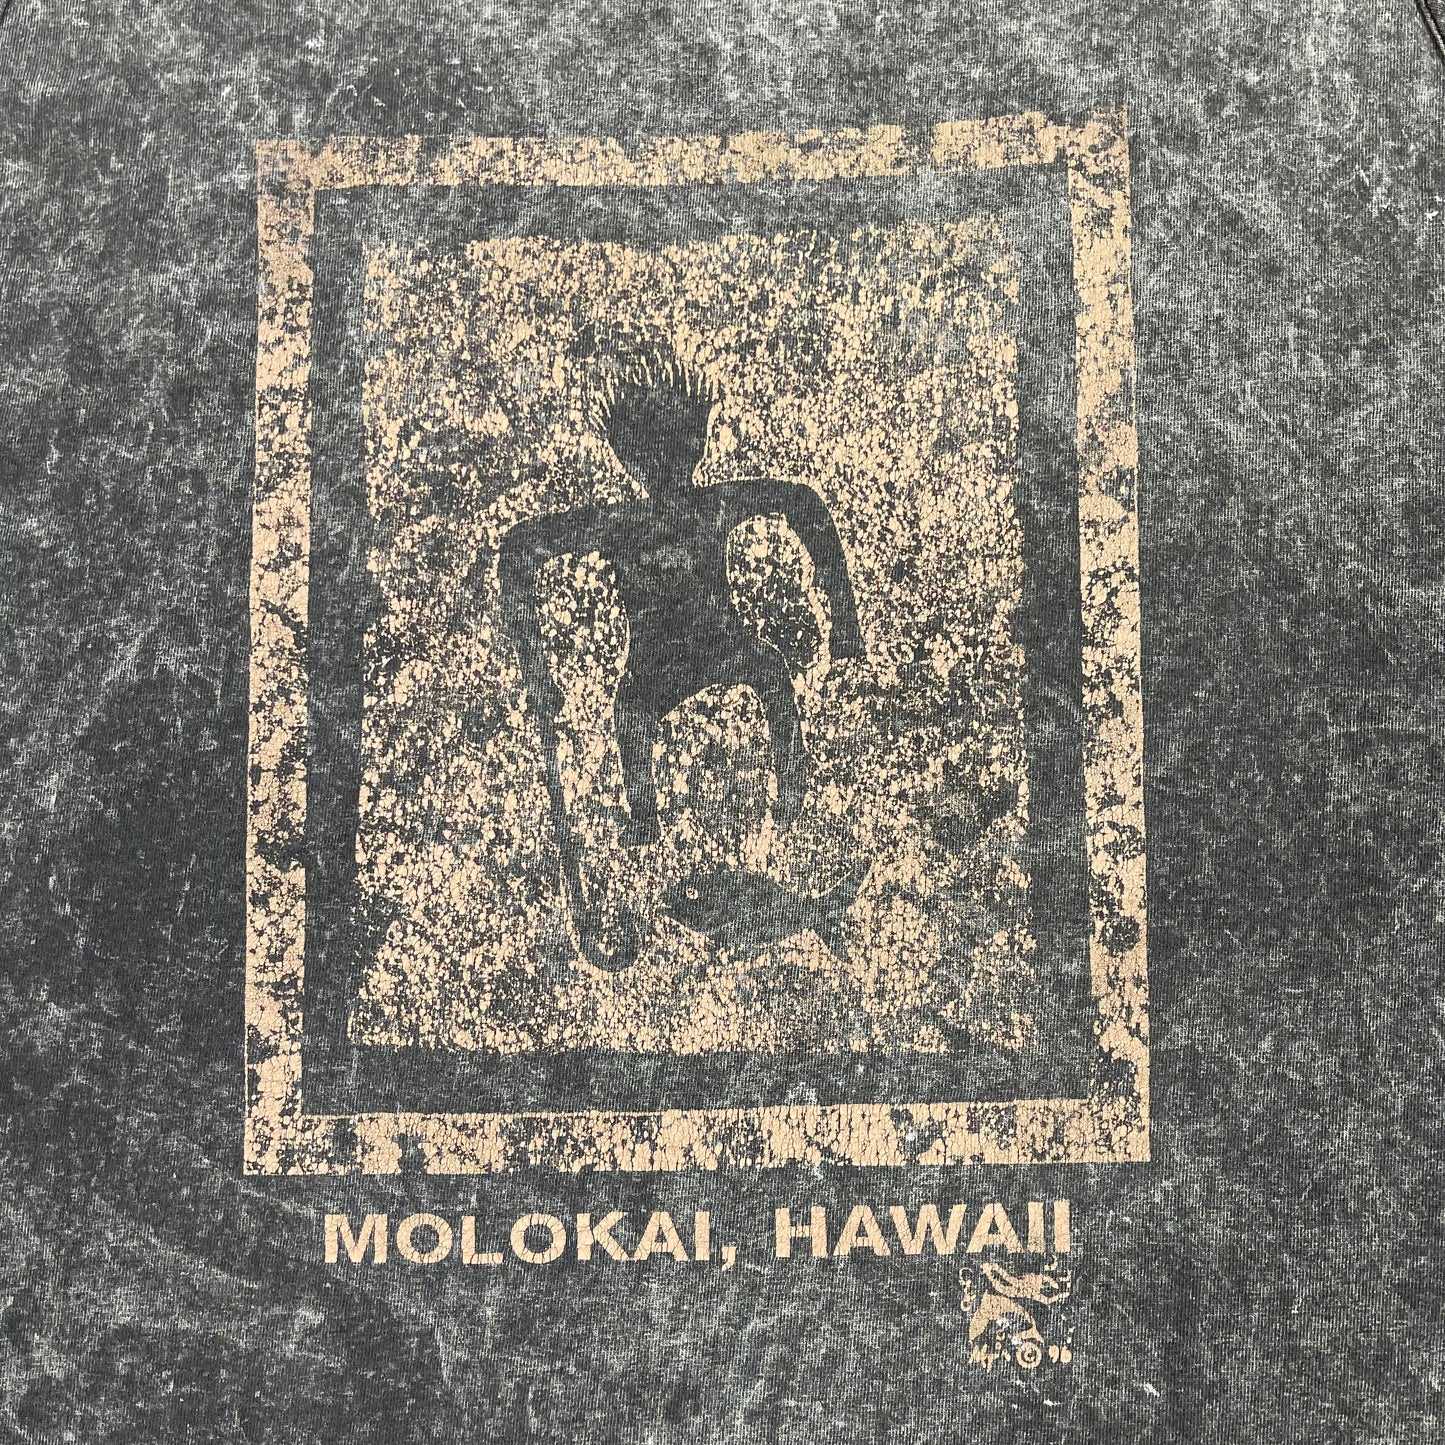 VINTAGE 1996 MOLOKAI HAWAII TANK